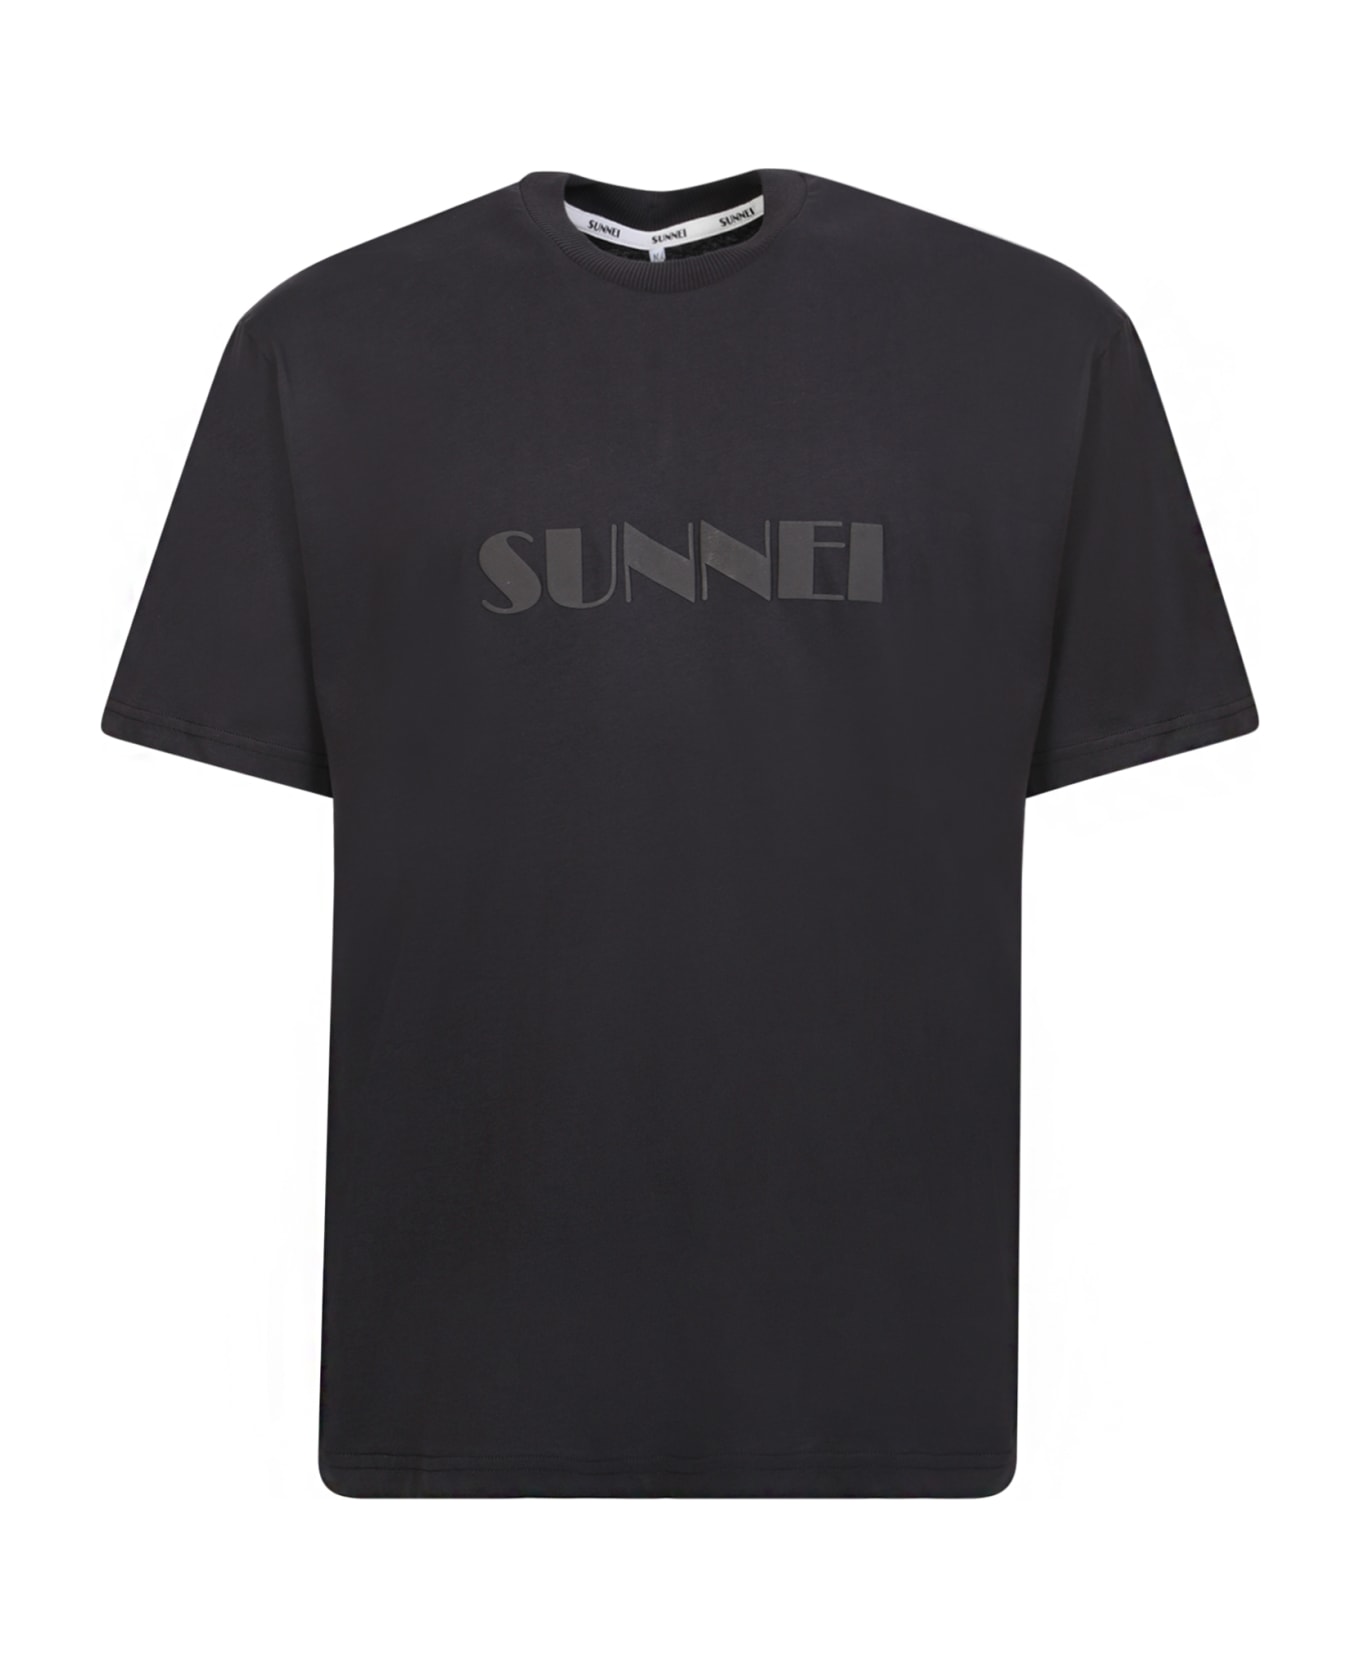 Sunnei Black Sprayed Logo T-shirt - Black